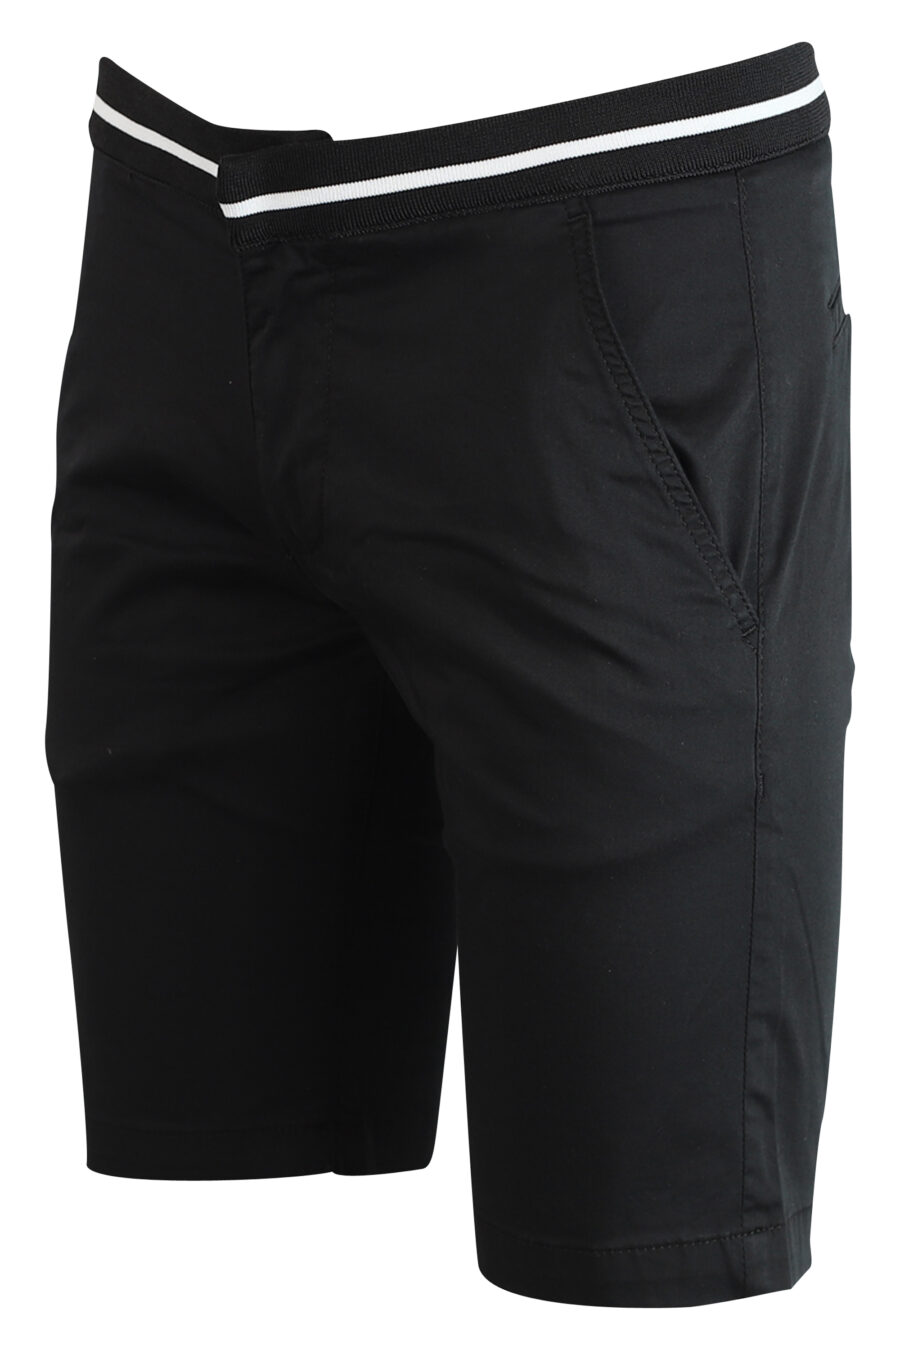 Pantalón negro corto con detalle blanco - 4062226164863 2